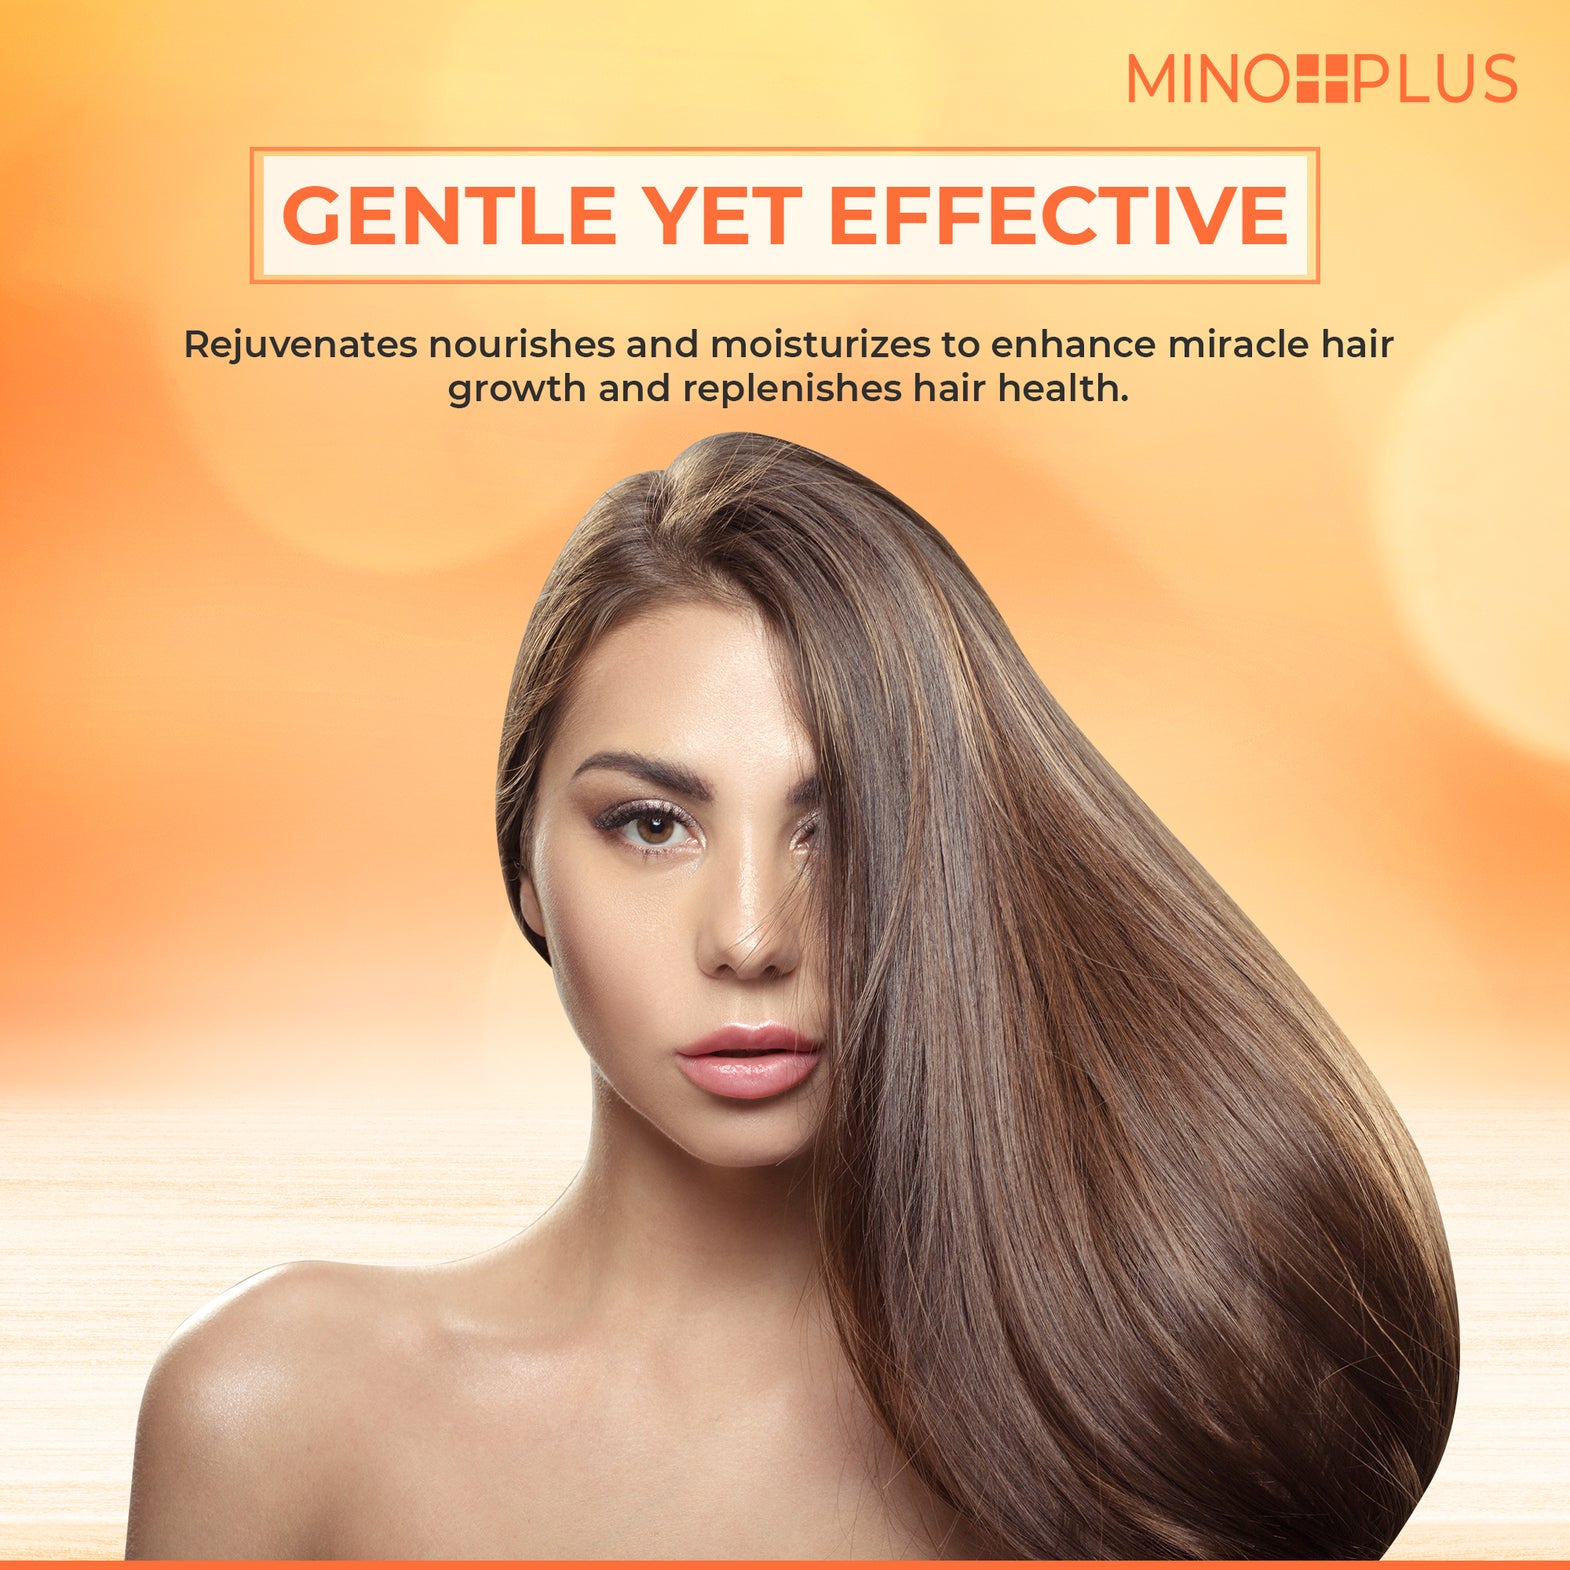 Mino Plus Natural Rejuvenator with Aloe Hair Growth Serum 30ml